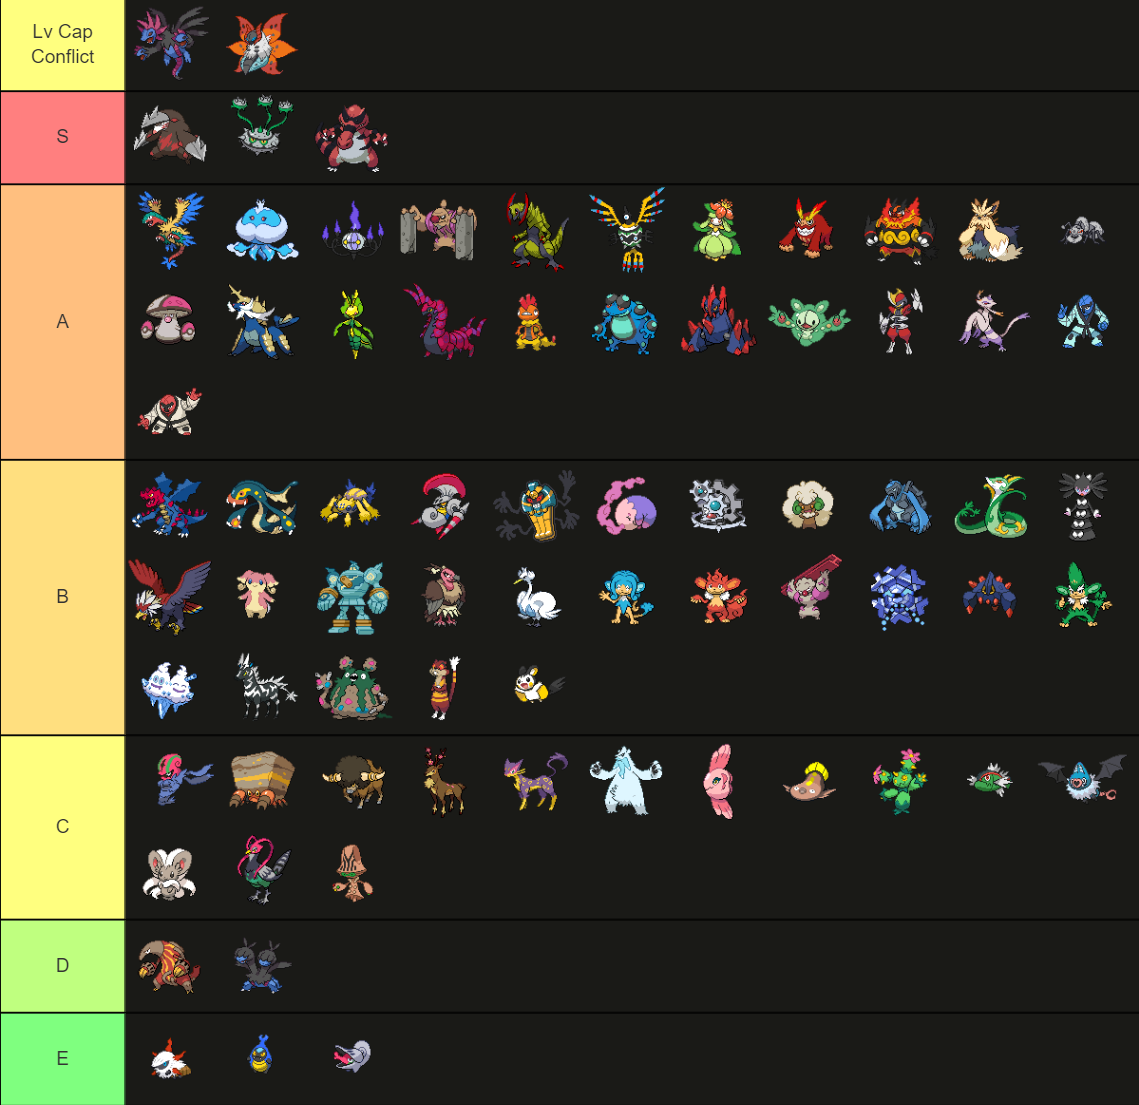 Type Match-Up Chart - Tutorial - Gameplay, Pokémon: Black and White